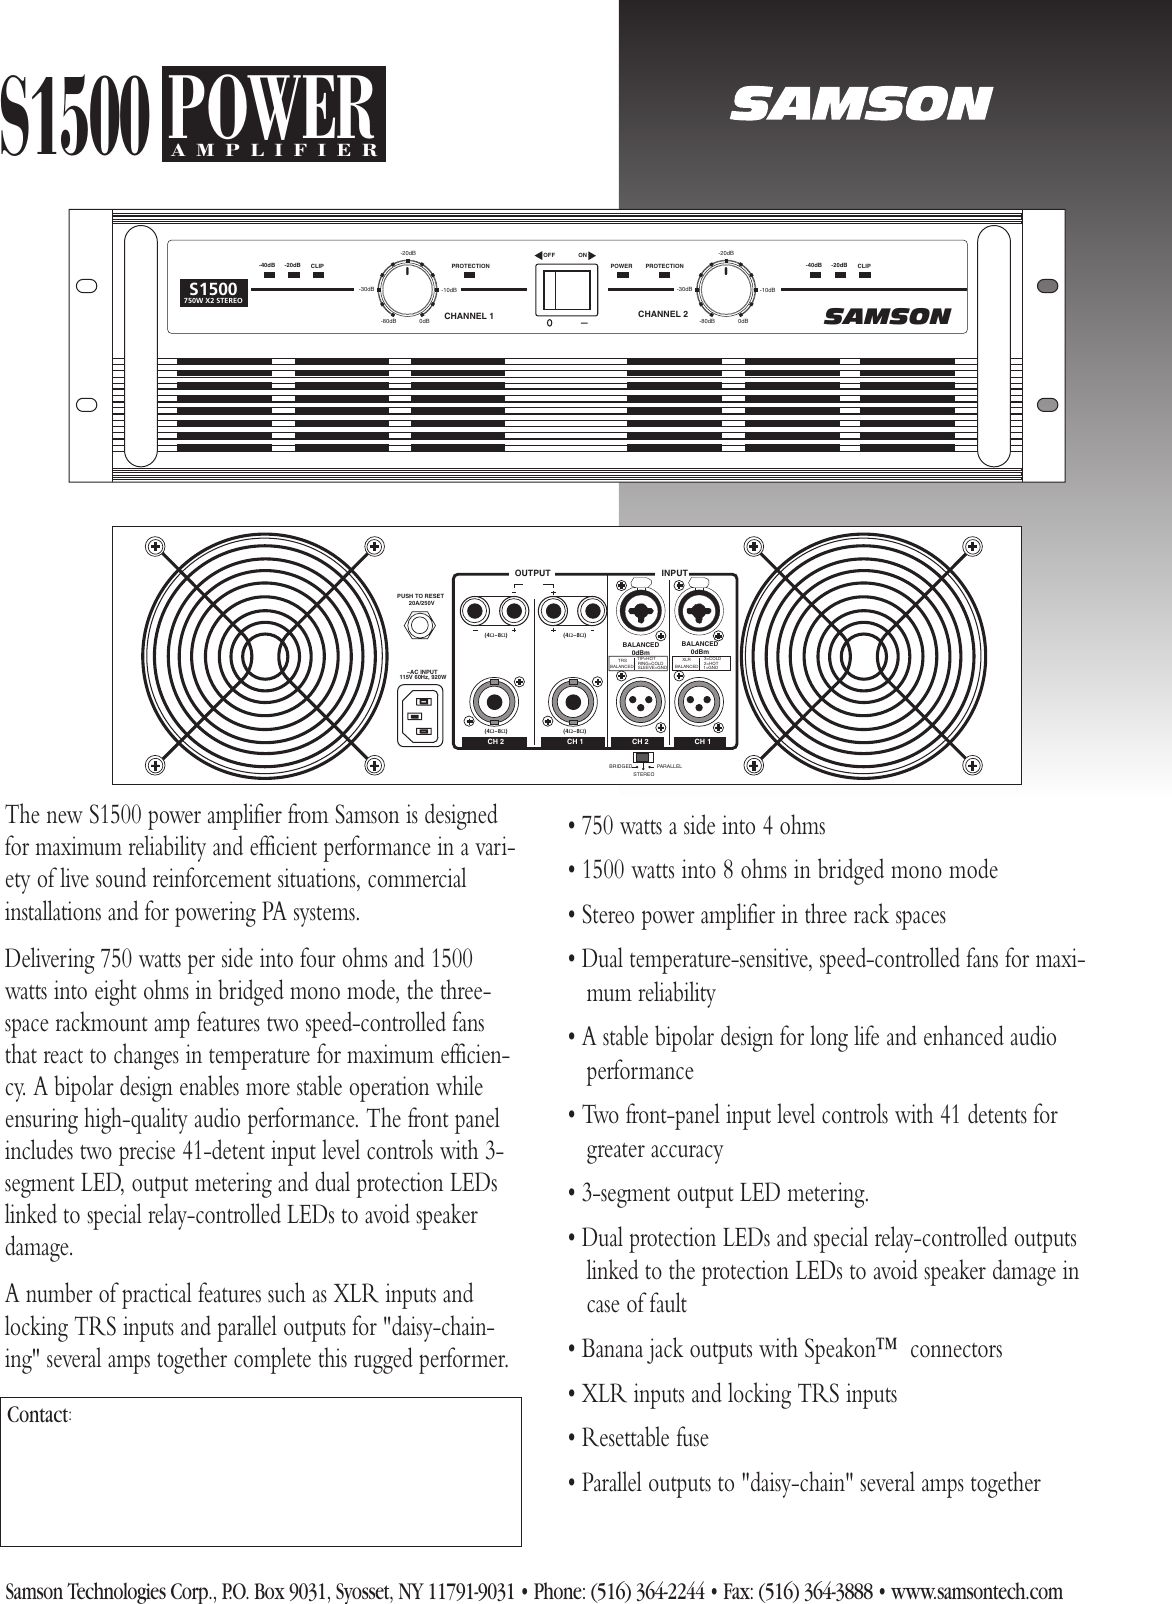 Page 1 of 2 - Samson Samson-S1500-Power-Amplifier-S1500-Users-Manual- S1500 Cont -05-2003  Samson-s1500-power-amplifier-s1500-users-manual